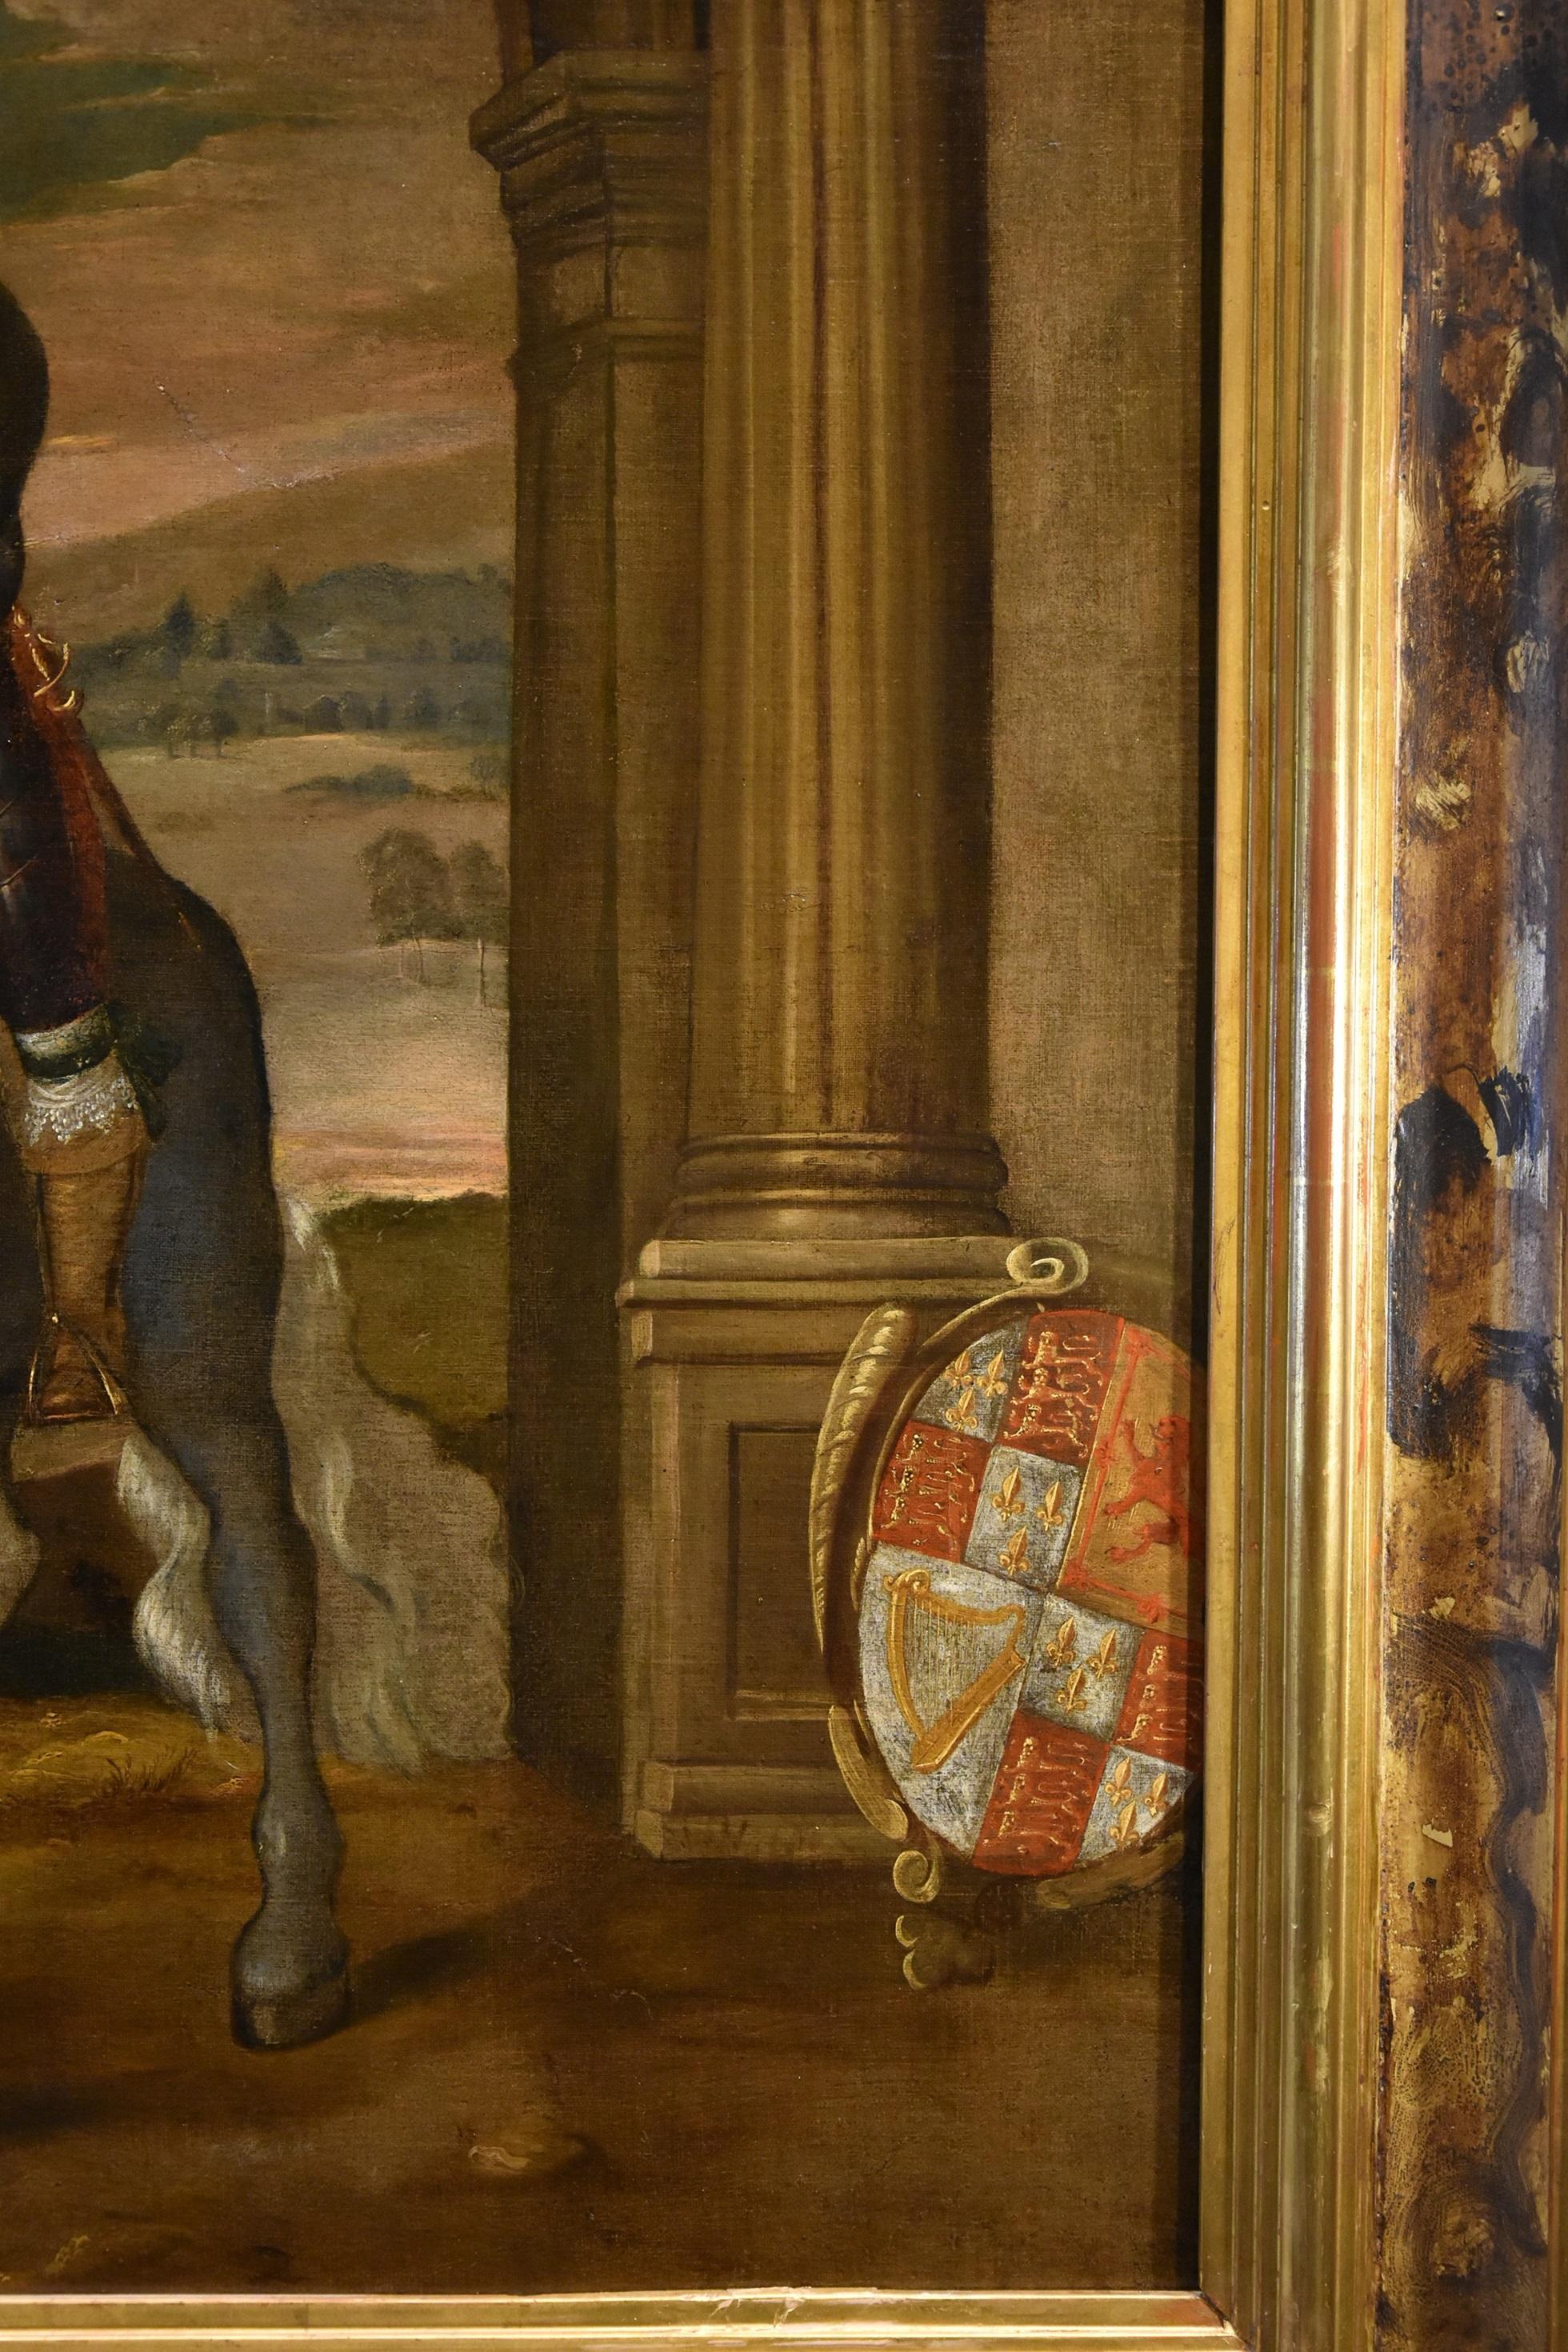 Porträt Charles I. König Van Dyck, Gemälde 17/18. Jahrhundert, Öl auf Leinwand, Alter Meister  (Alte Meister), Painting, von  Anthoon Van Dyck (antwerp 1599 - London 1641) 